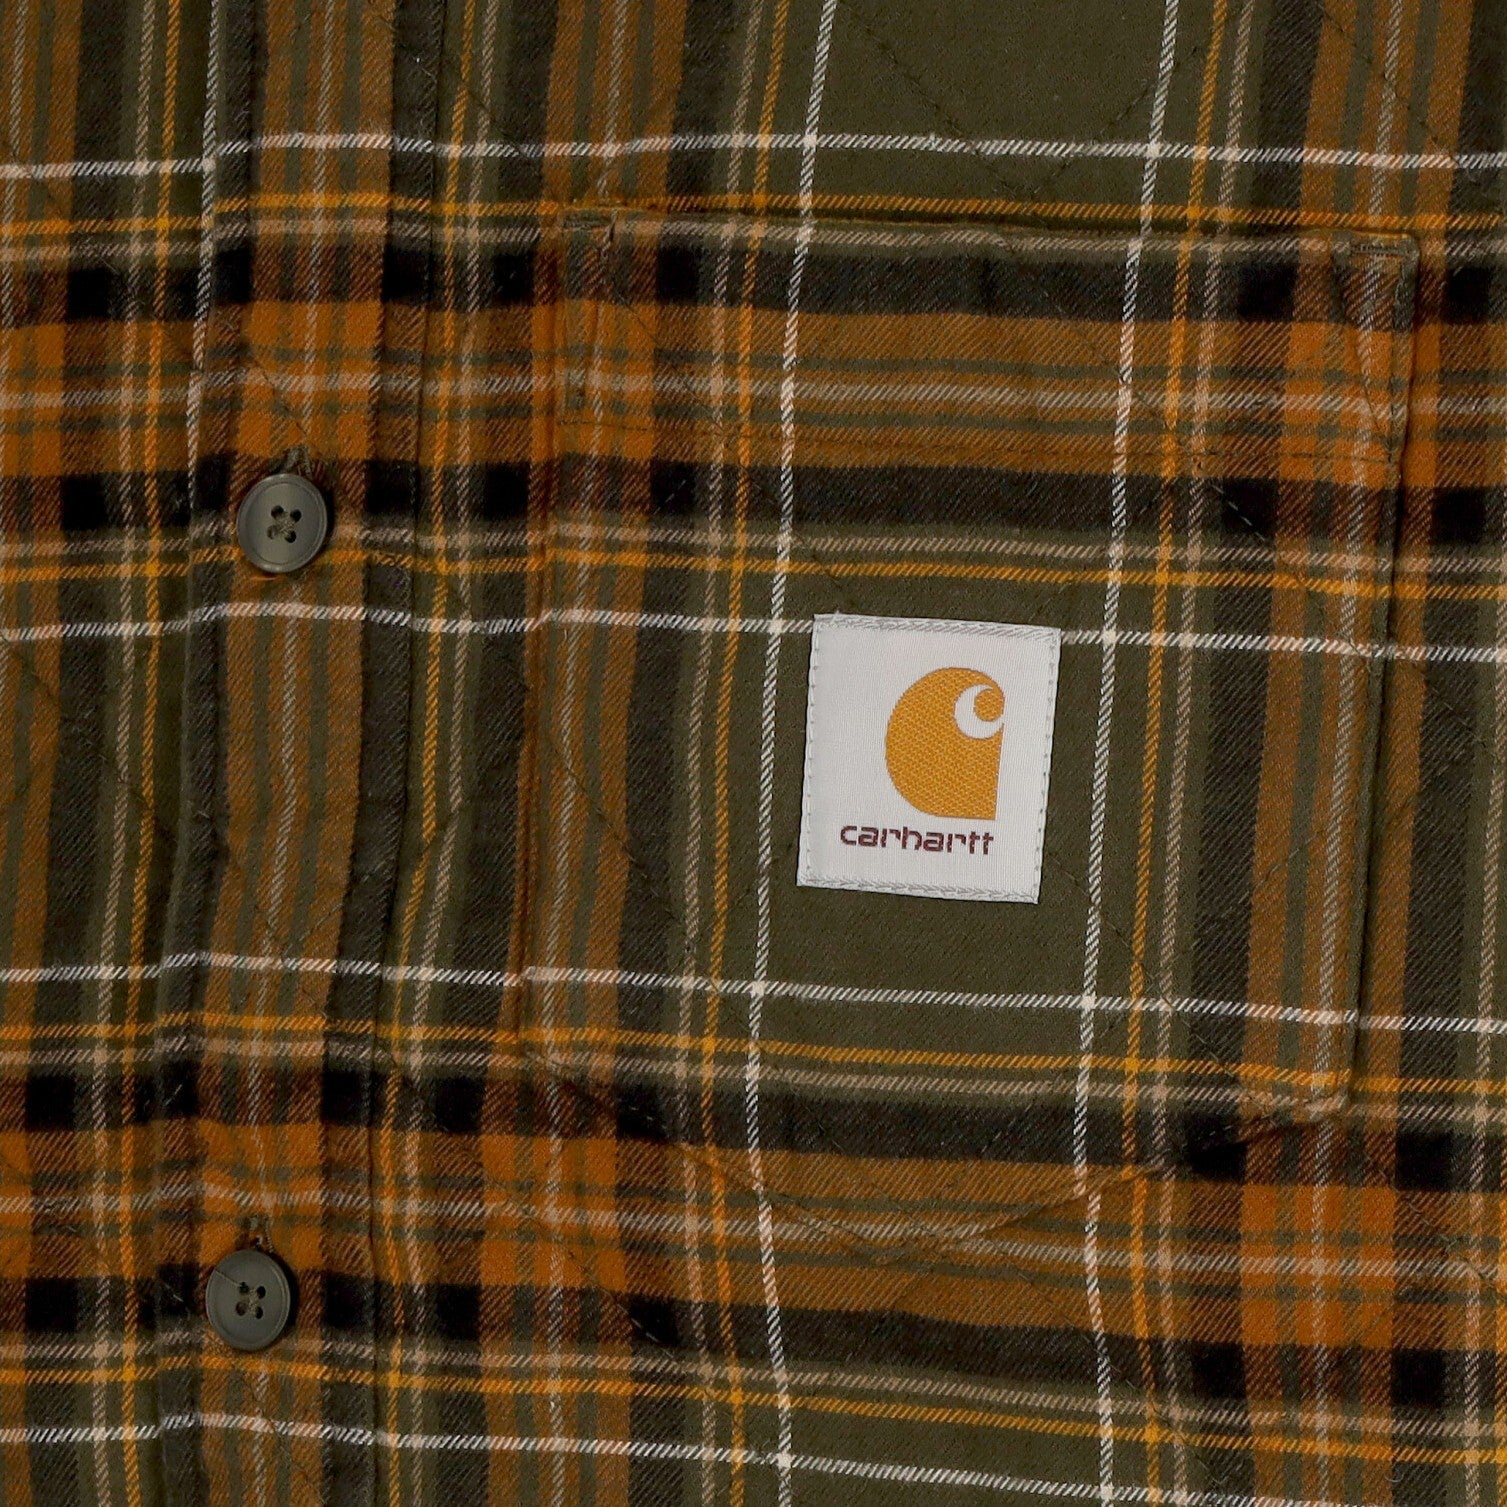 Carhartt Wip, Camicia Imbottita Uomo Wiles Shirt Jacket, Wiles Check/highland